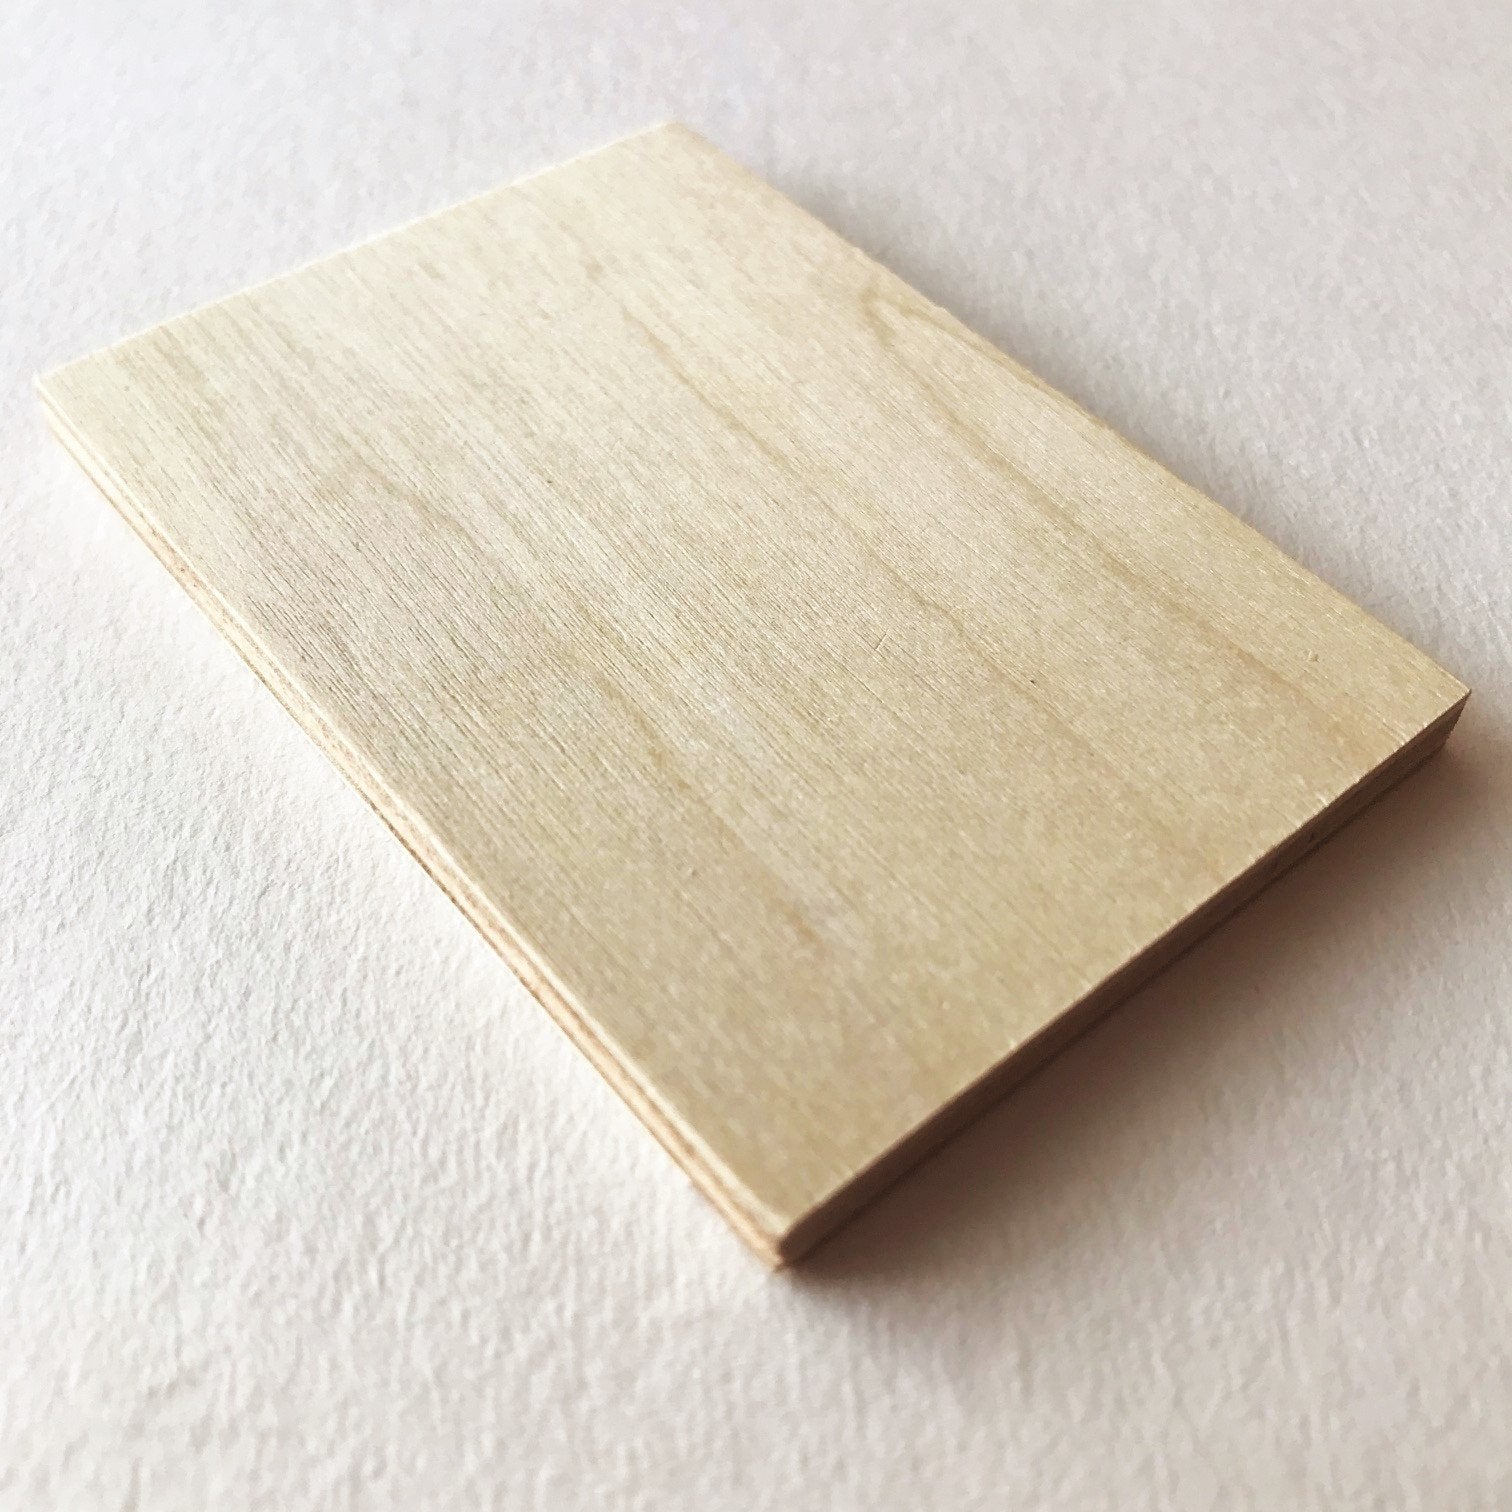 Baltic Birch Marine Grade Plywood Full Sheets 48x96 (4' x 8')